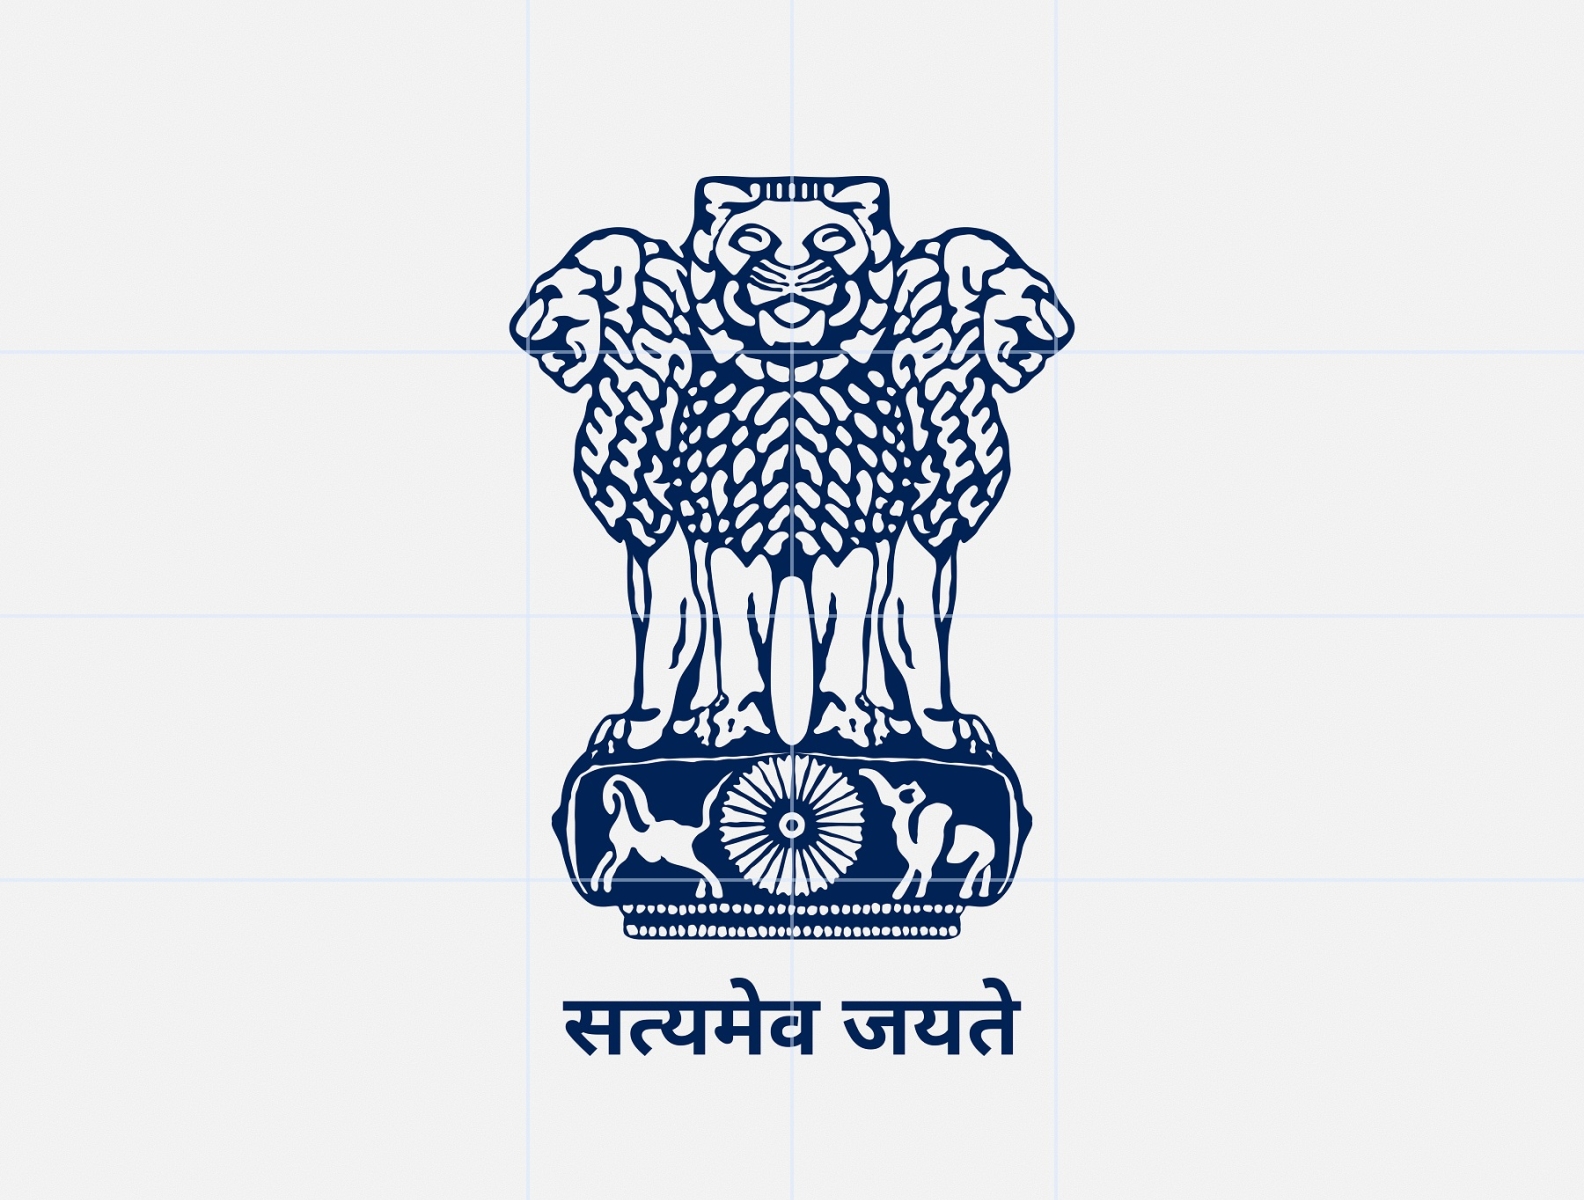 Emblem of India Logo PNG Images (Transparent HD Photo Clipart) | India logo,  Photo clipart, Png images